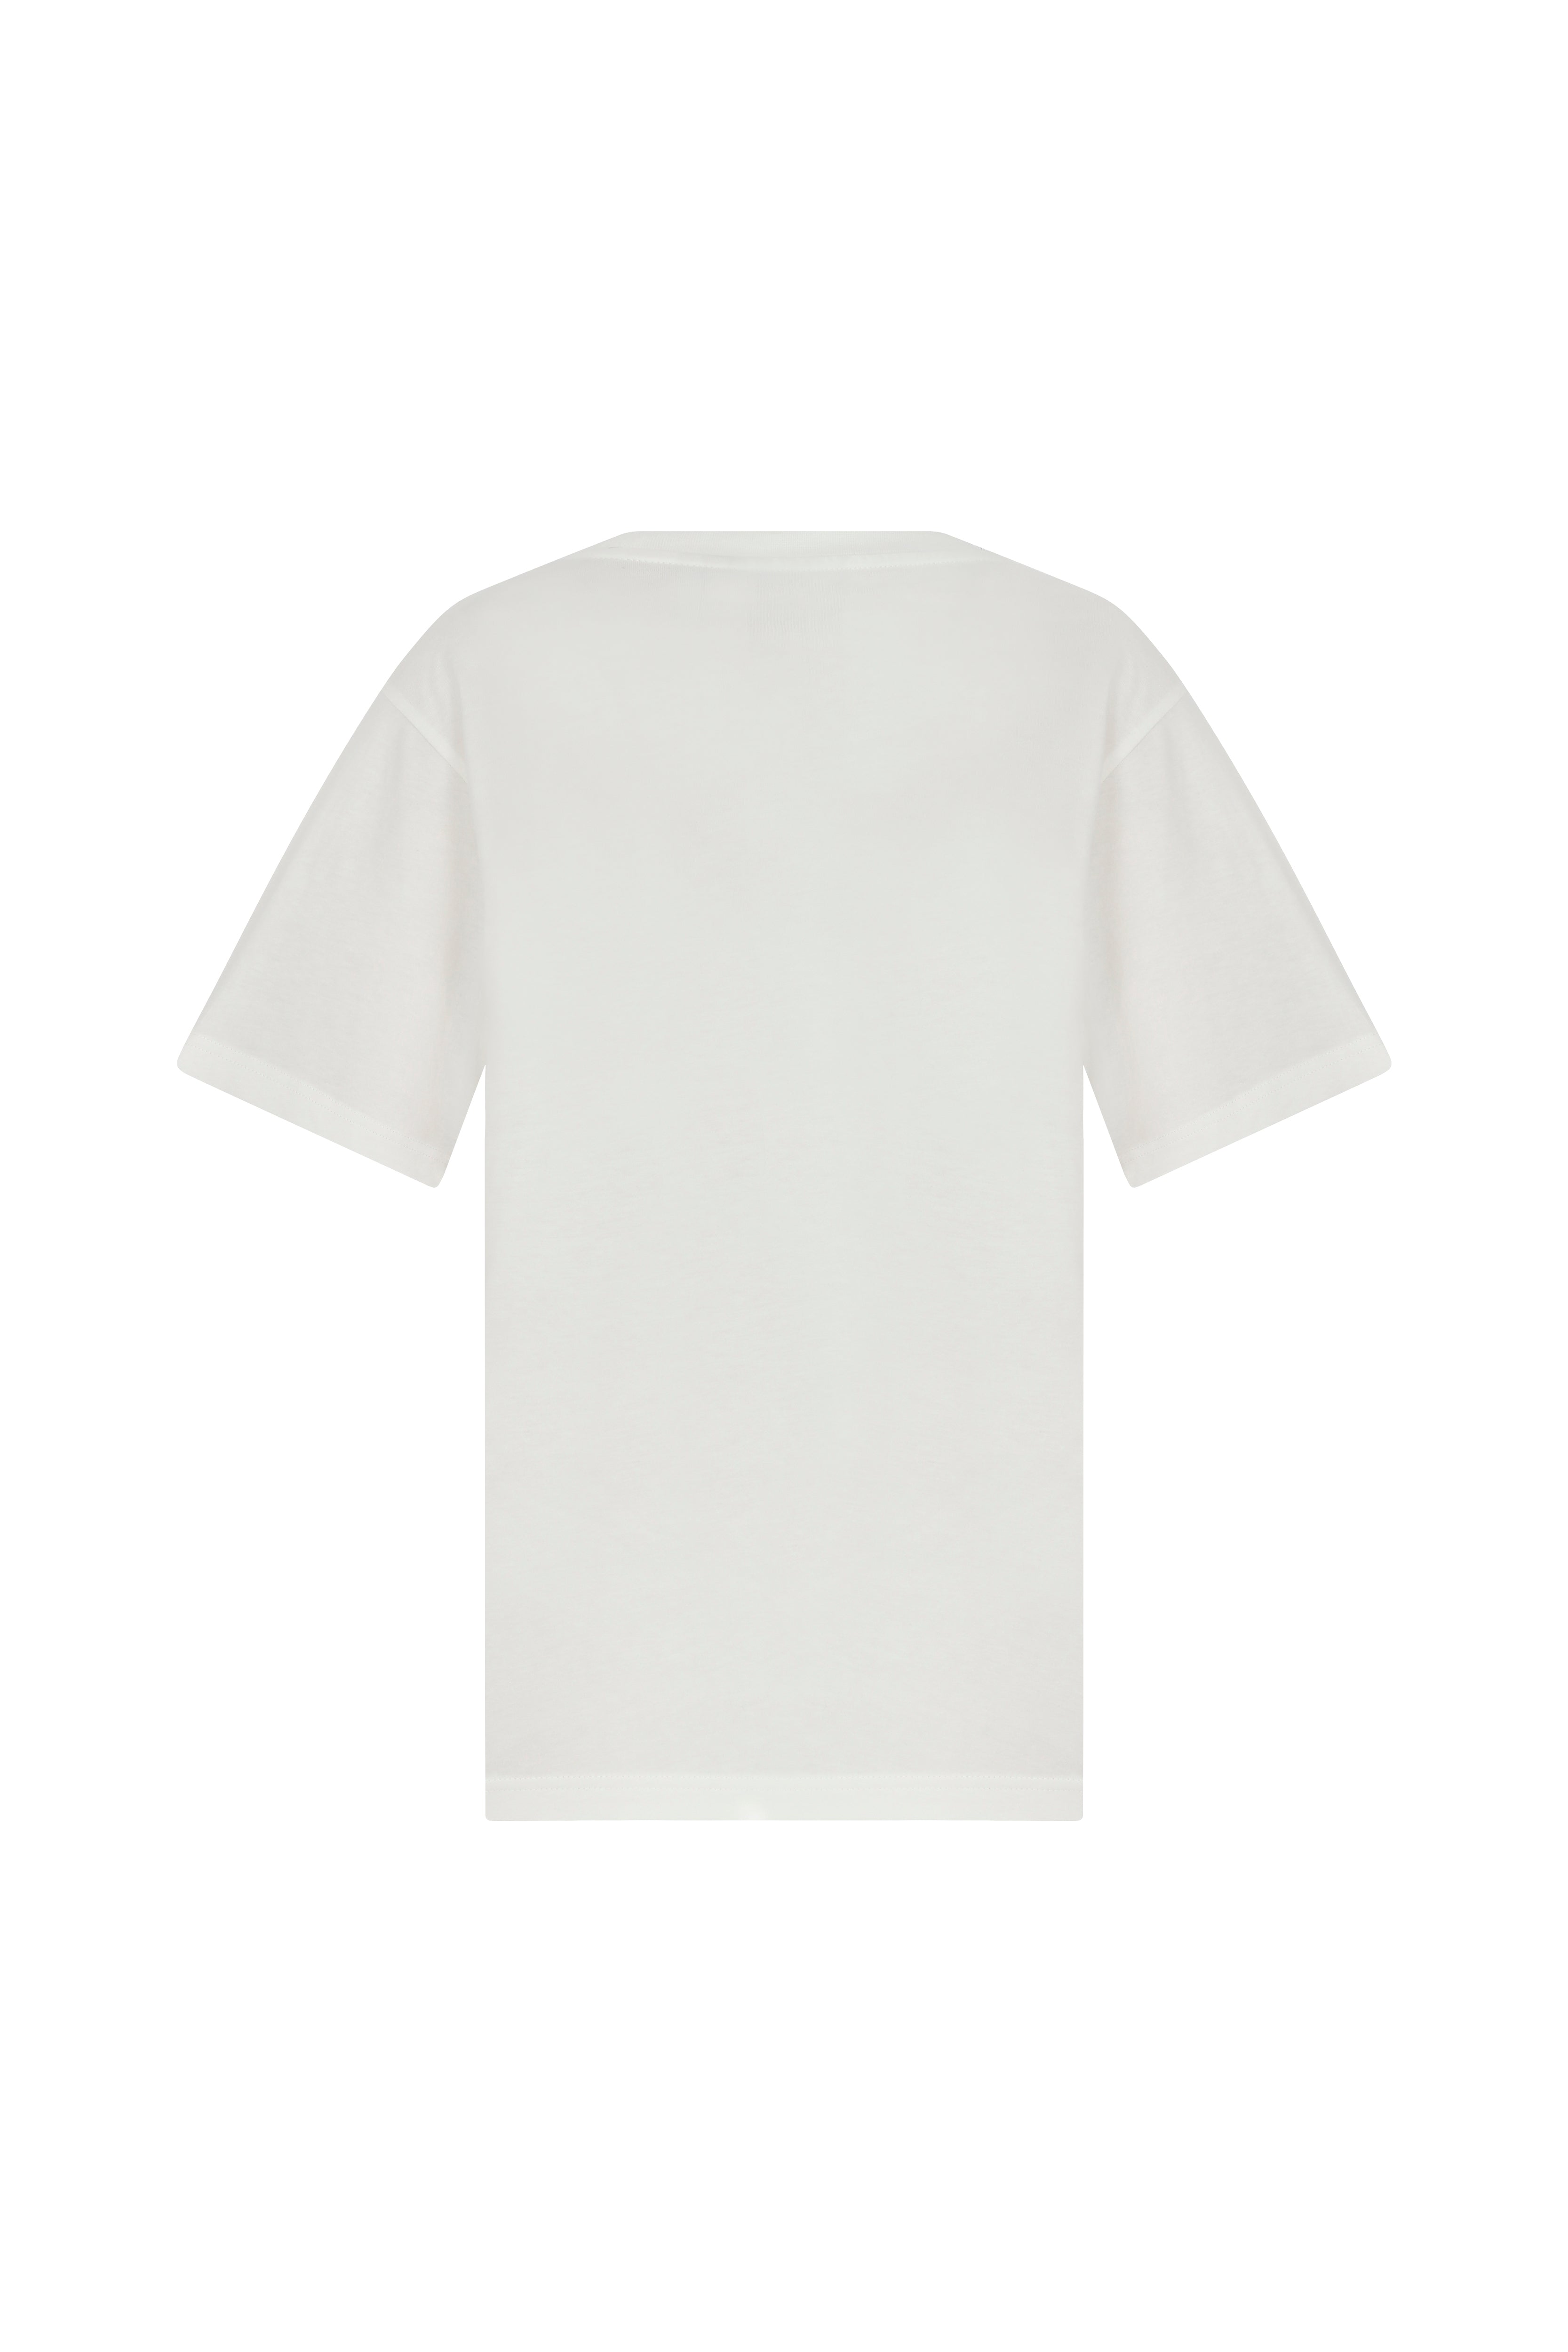 iiDossan Letter Print T Shirts Men Sports Short Sleeve Tshirt